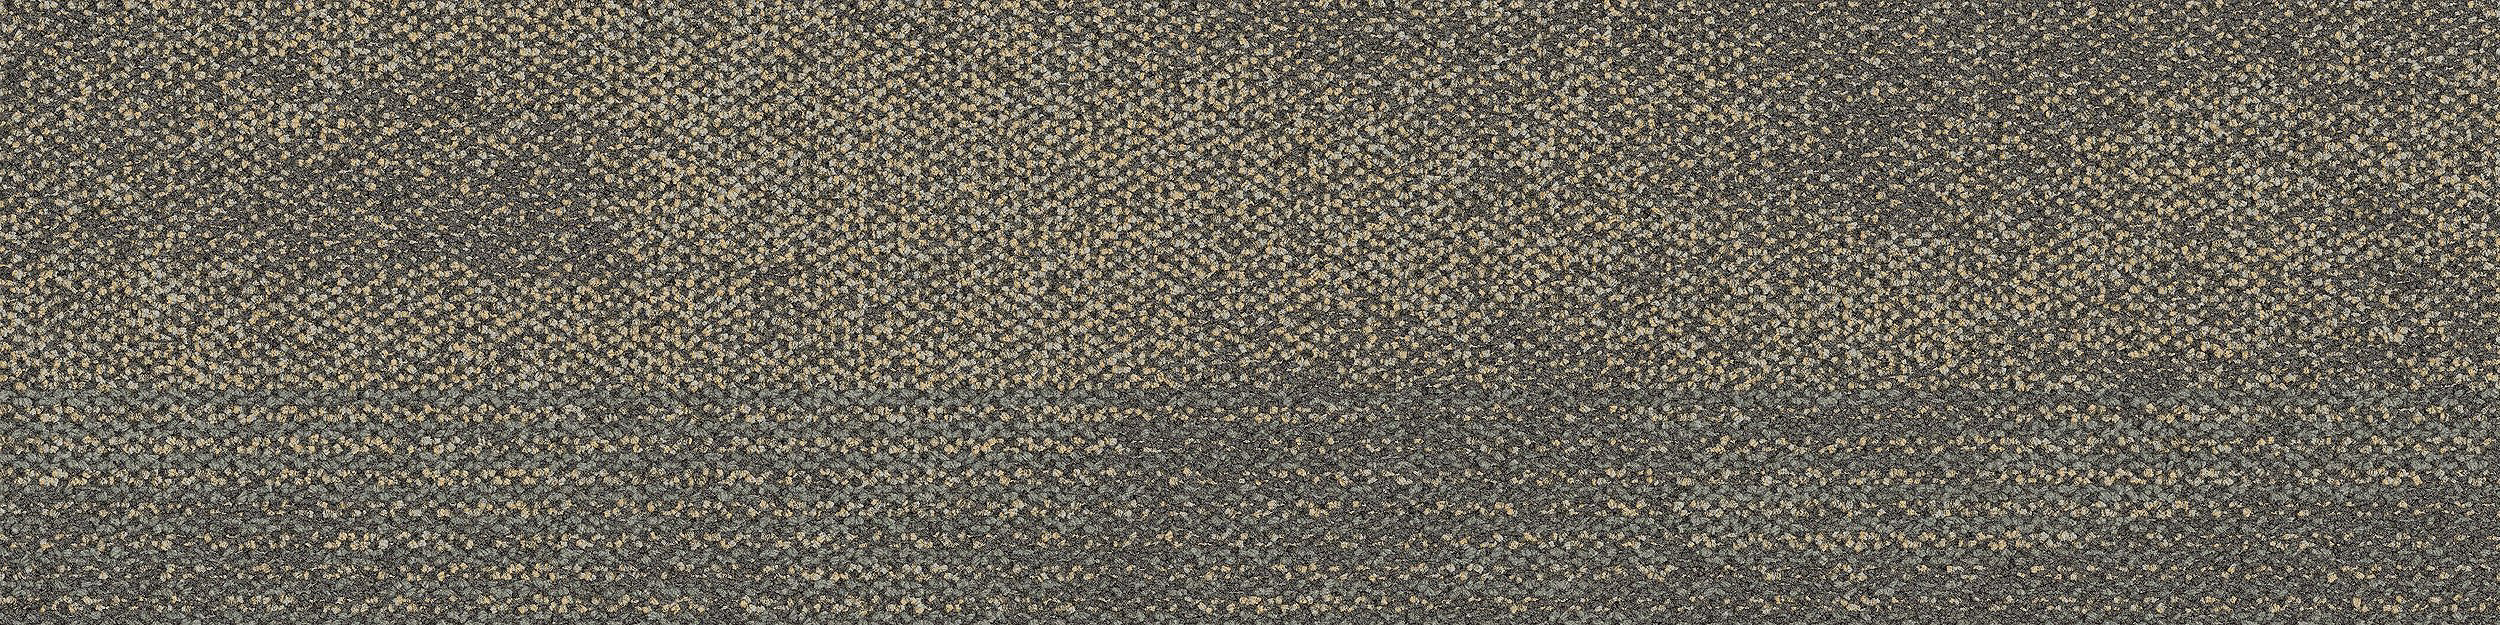 Neighborhood Smooth Carpet Tile In Greige/Smooth imagen número 10